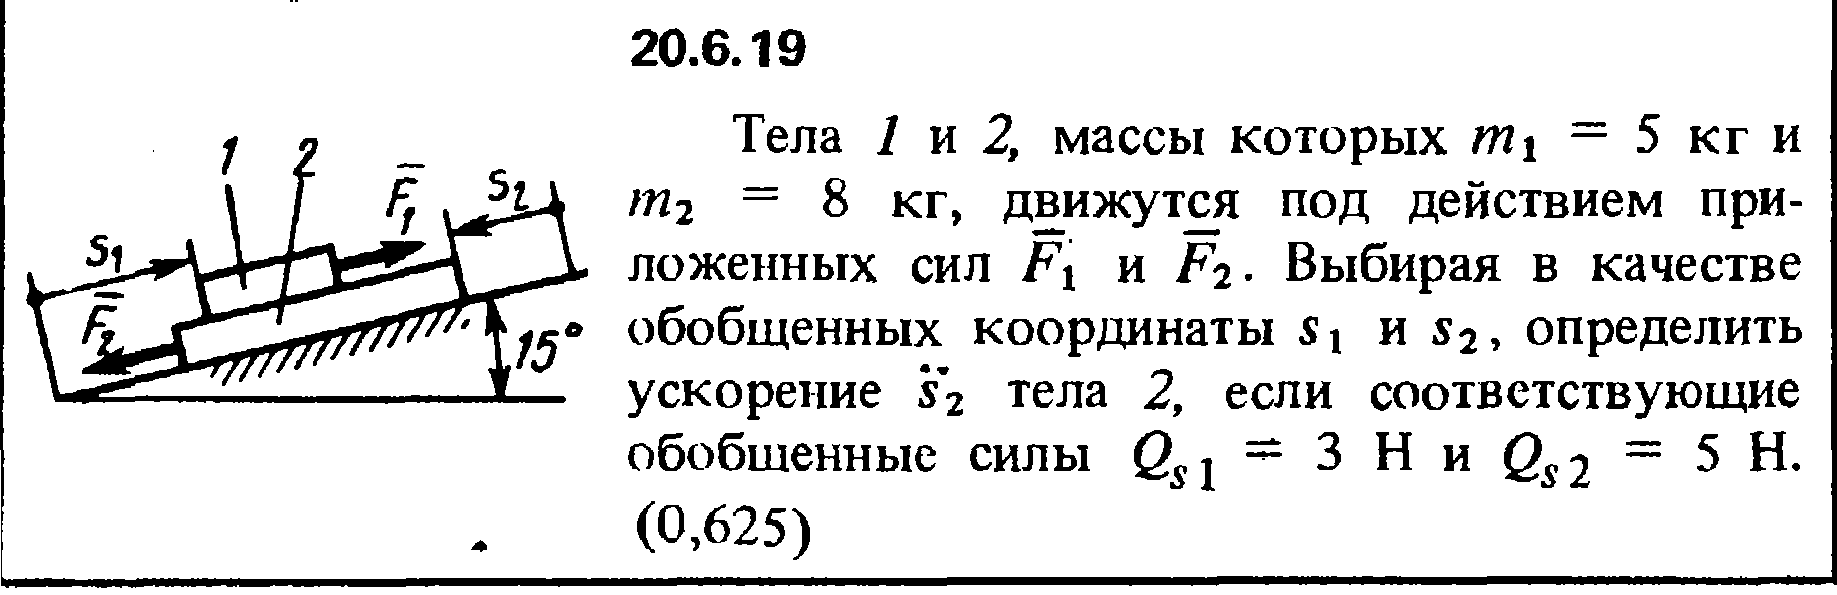 Решение 20.6.19 из сборника (решебника) Кепе О.Е. 1989